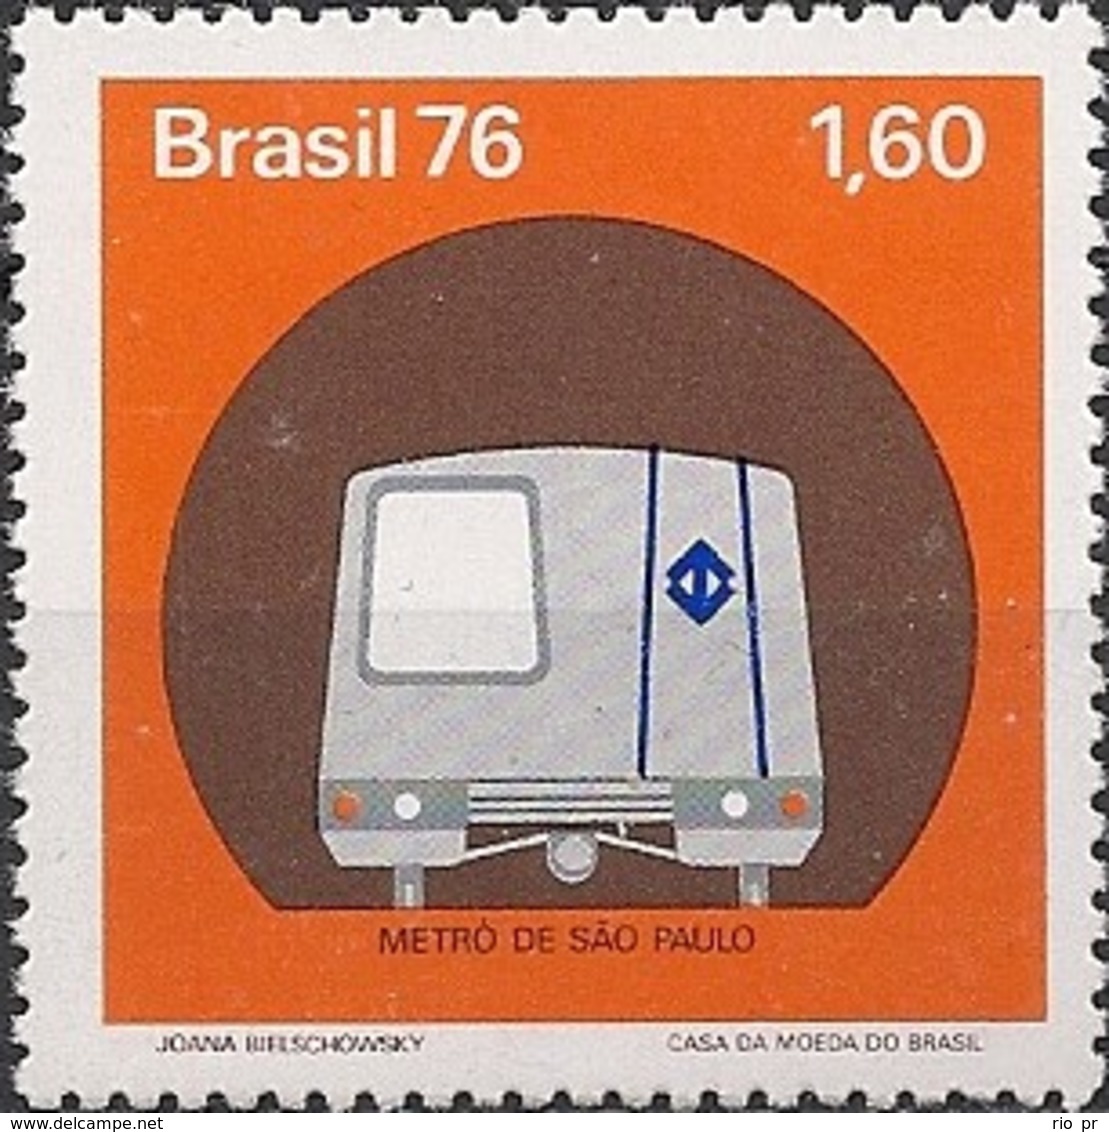 BRAZIL - SÃO PAULO SUBWAY, 1st IN BRAZIL 1976 - MNH - Tram